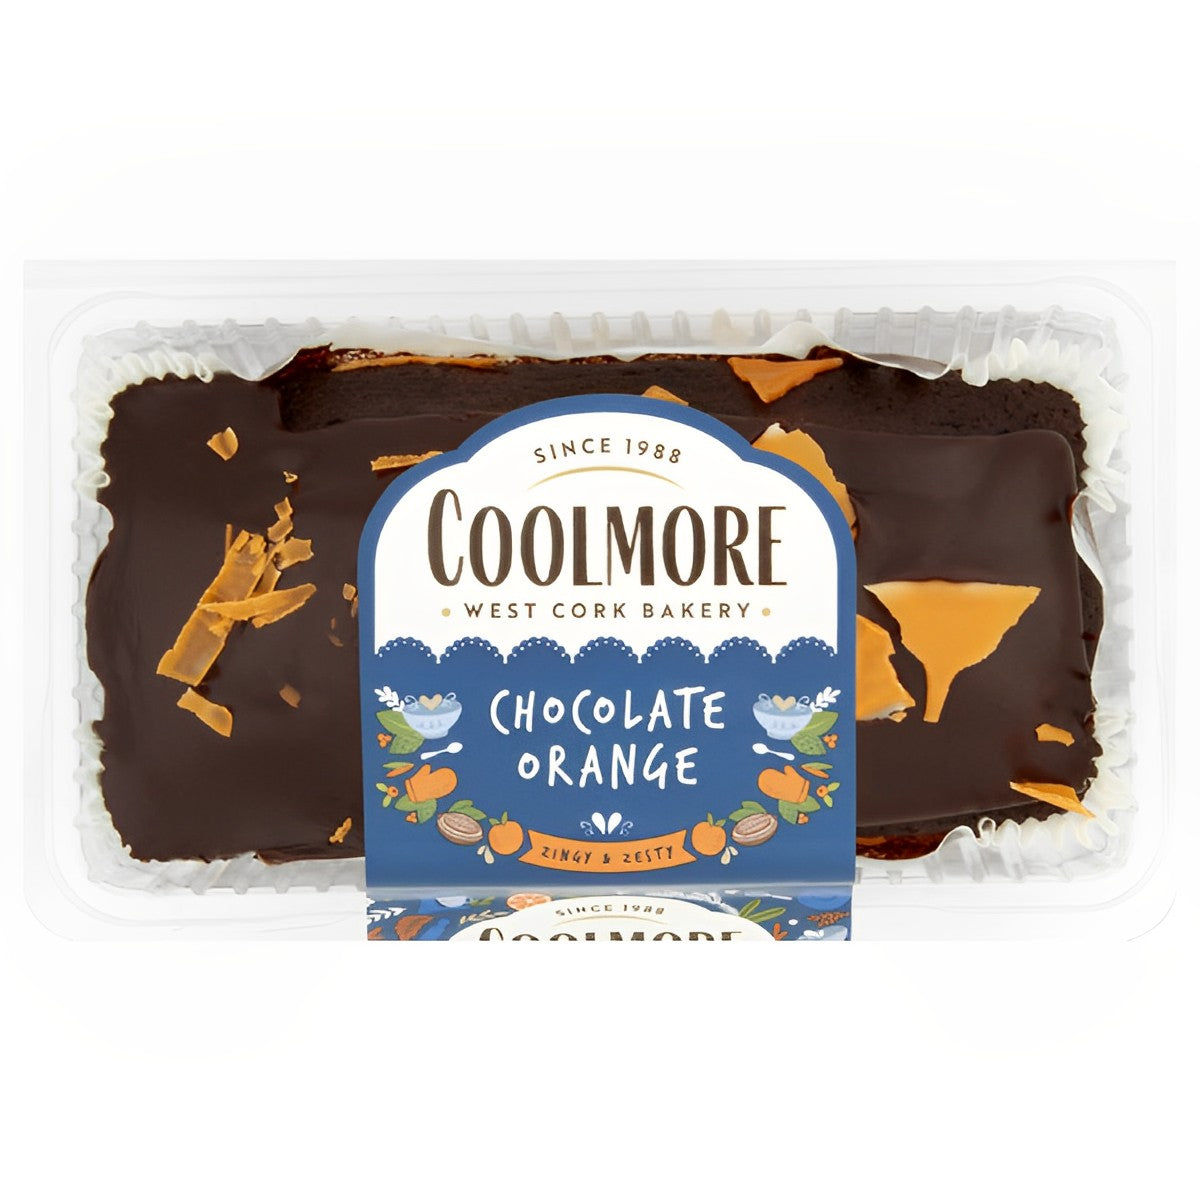 Coolmore - Luxury Chocolate Orange Cake - 400g - Continental Food Store